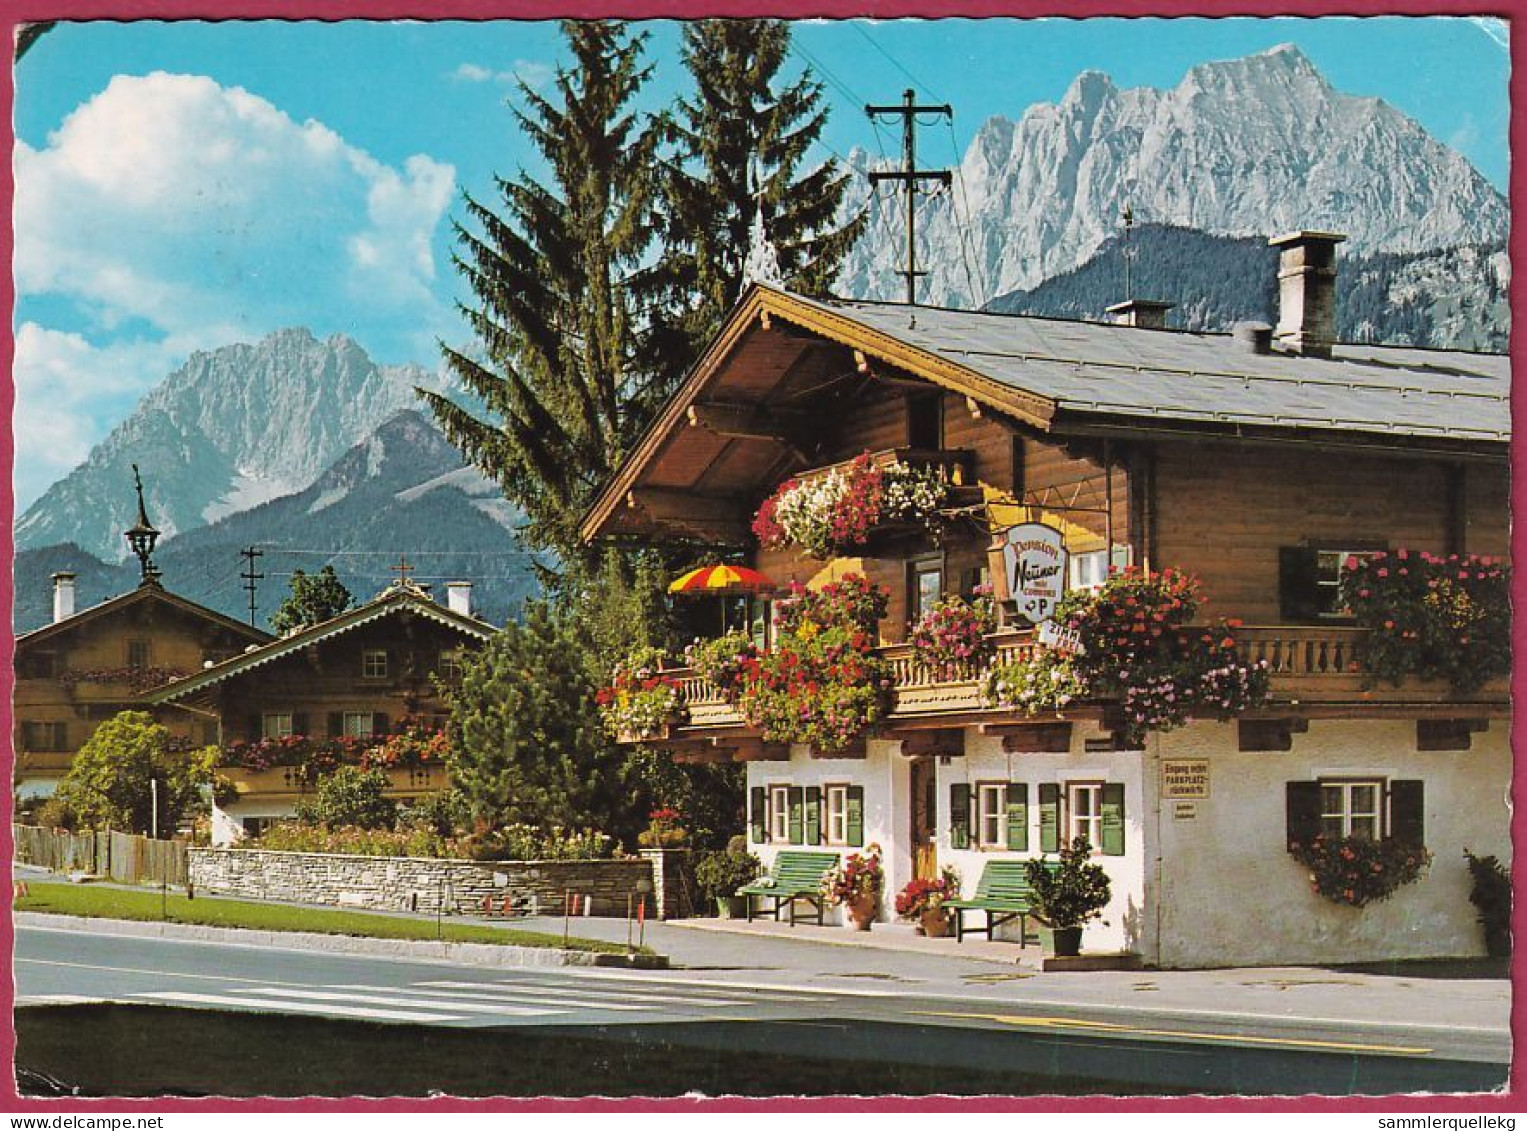 AK: Motiv Aus St. Johann, Gelaufen 3. 8.1973 (Nr. 4796) - St. Johann In Tirol